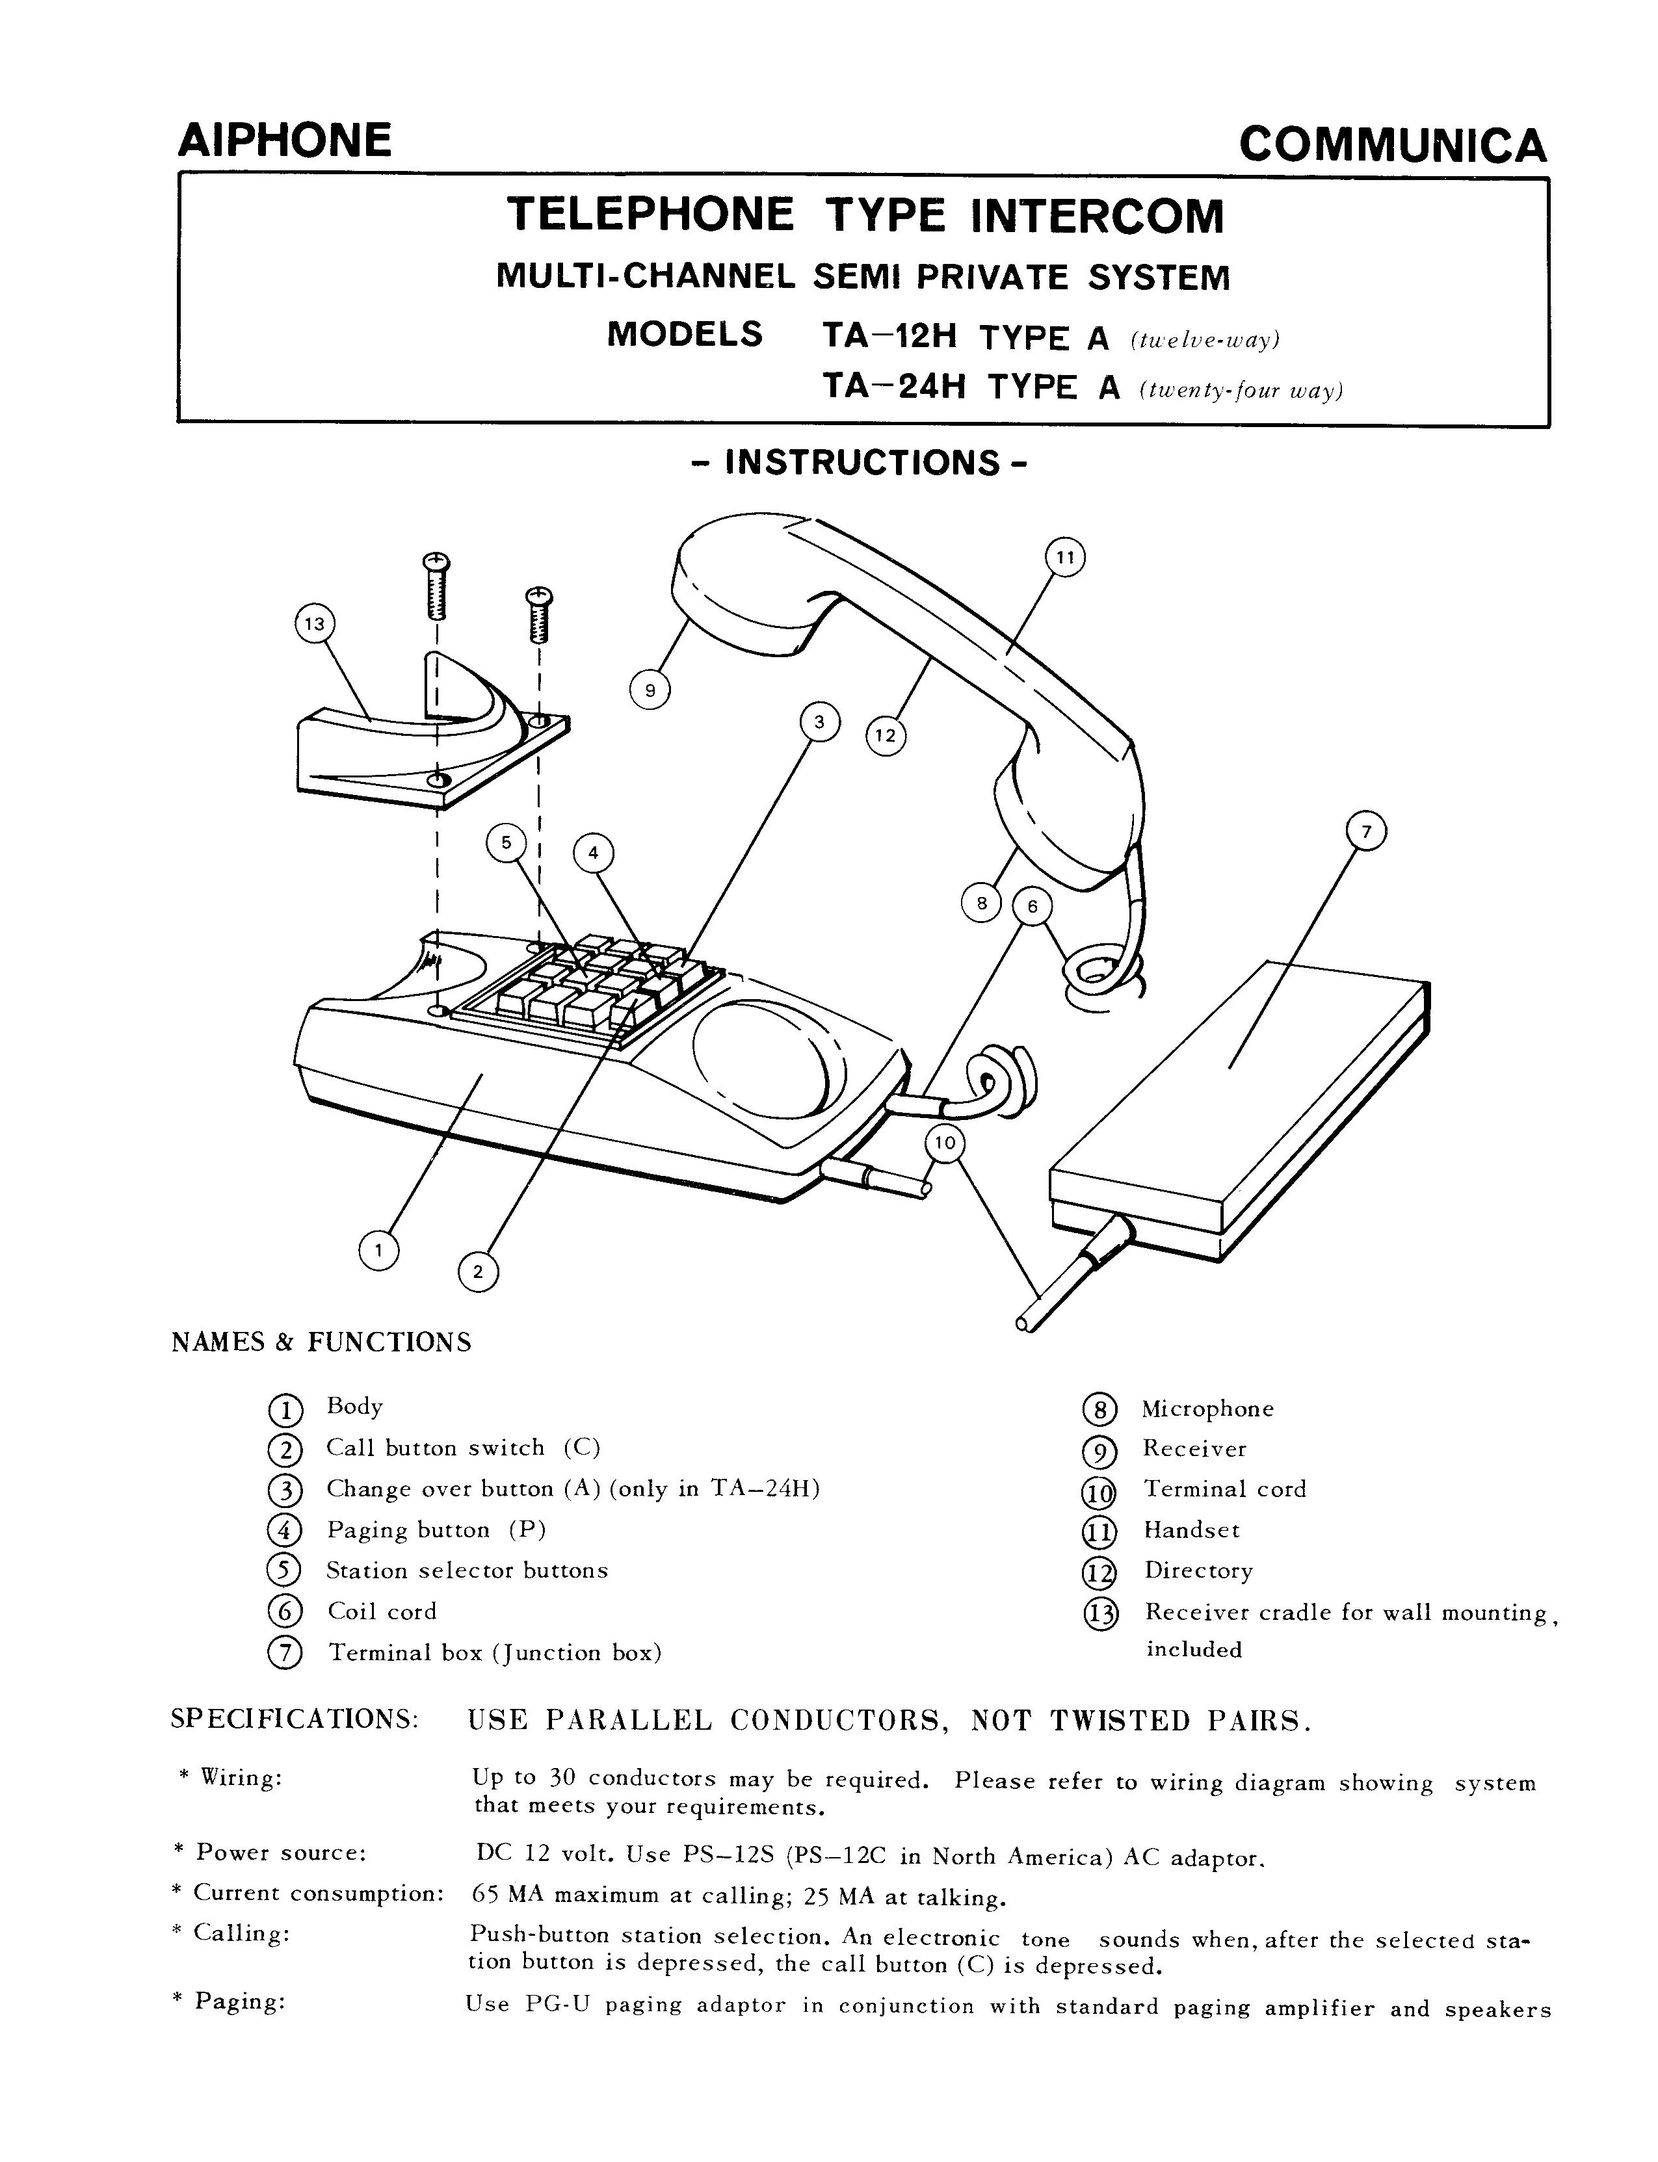 Aiphone TA-24H Telephone User Manual